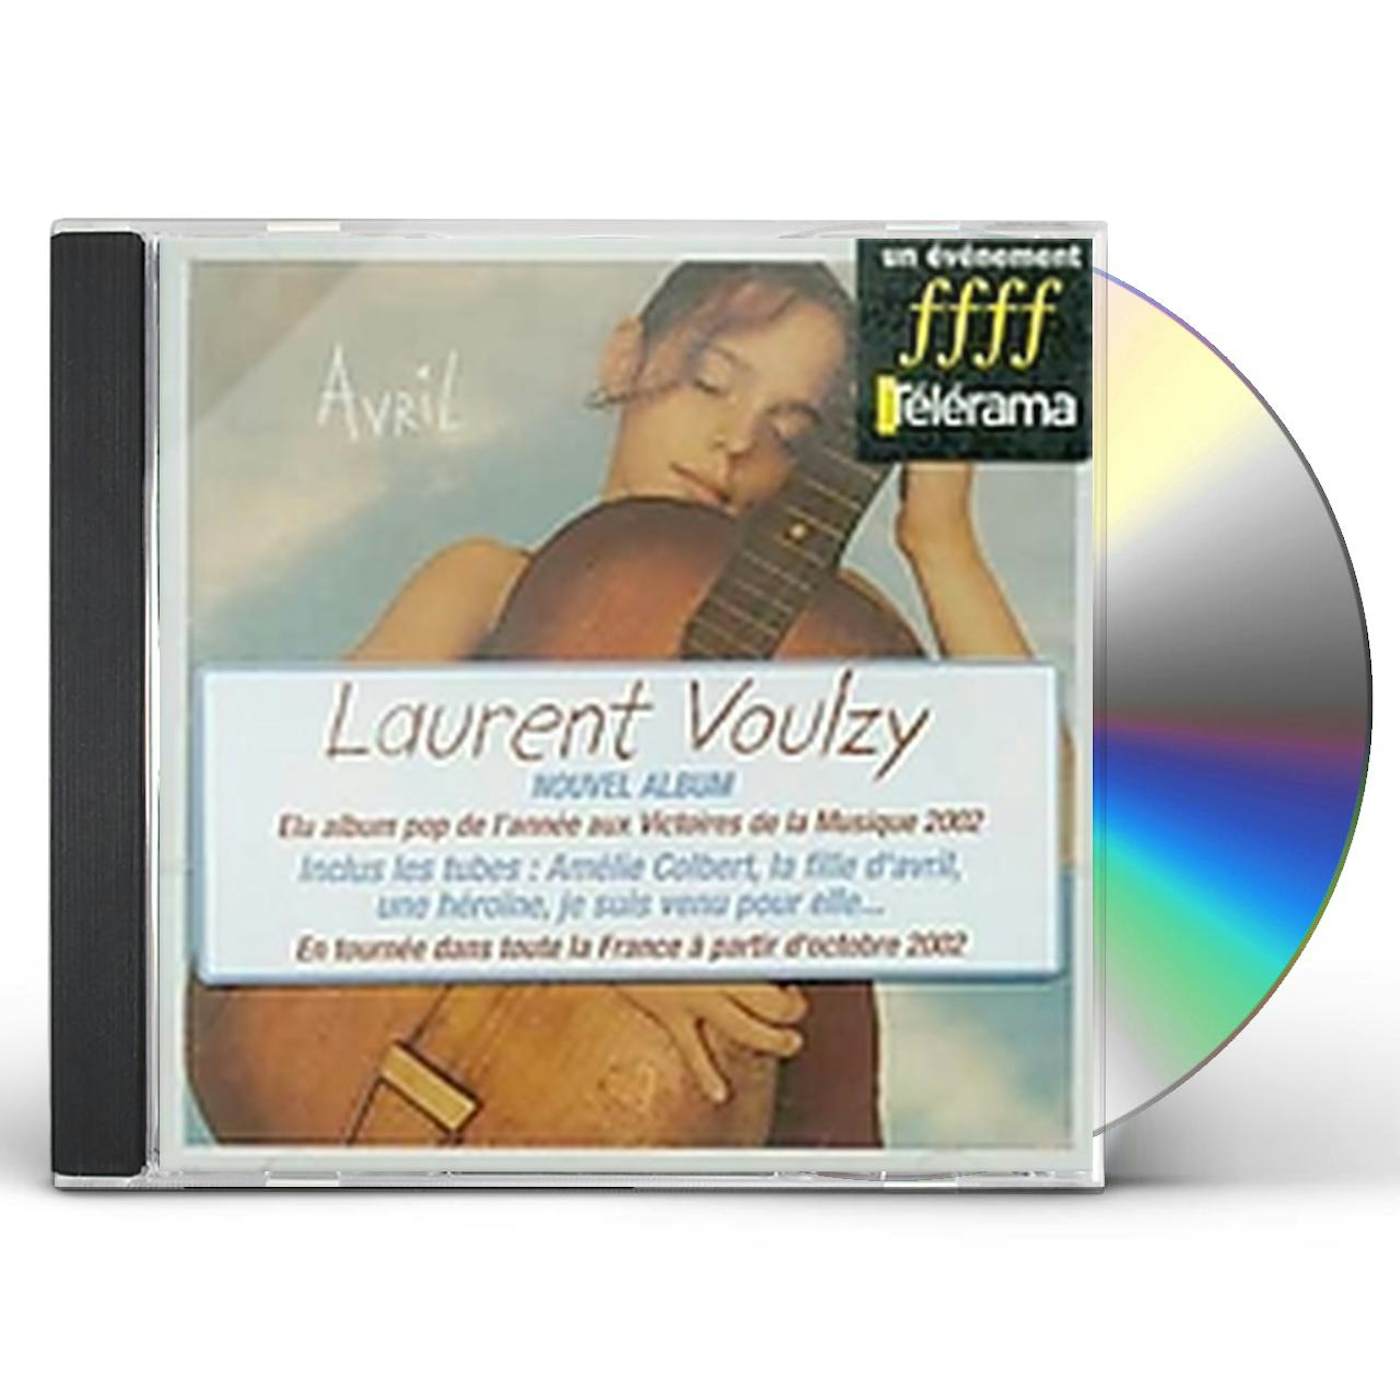 Laurent Voulzy AVRIL CD